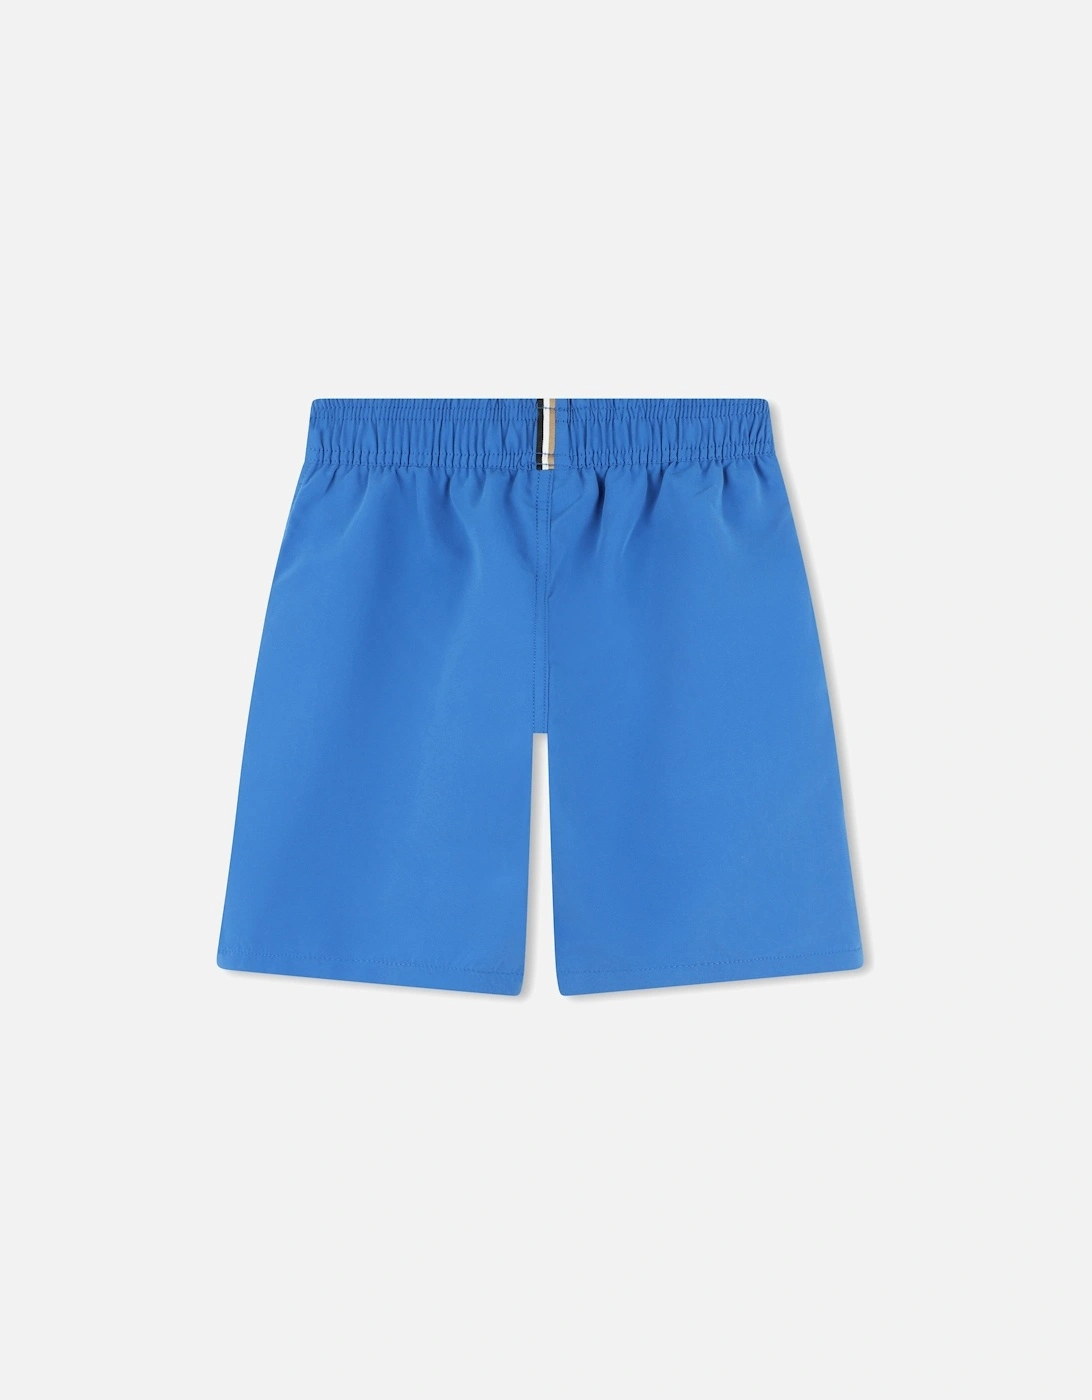 Juniors Swimming Shorts (Blue)